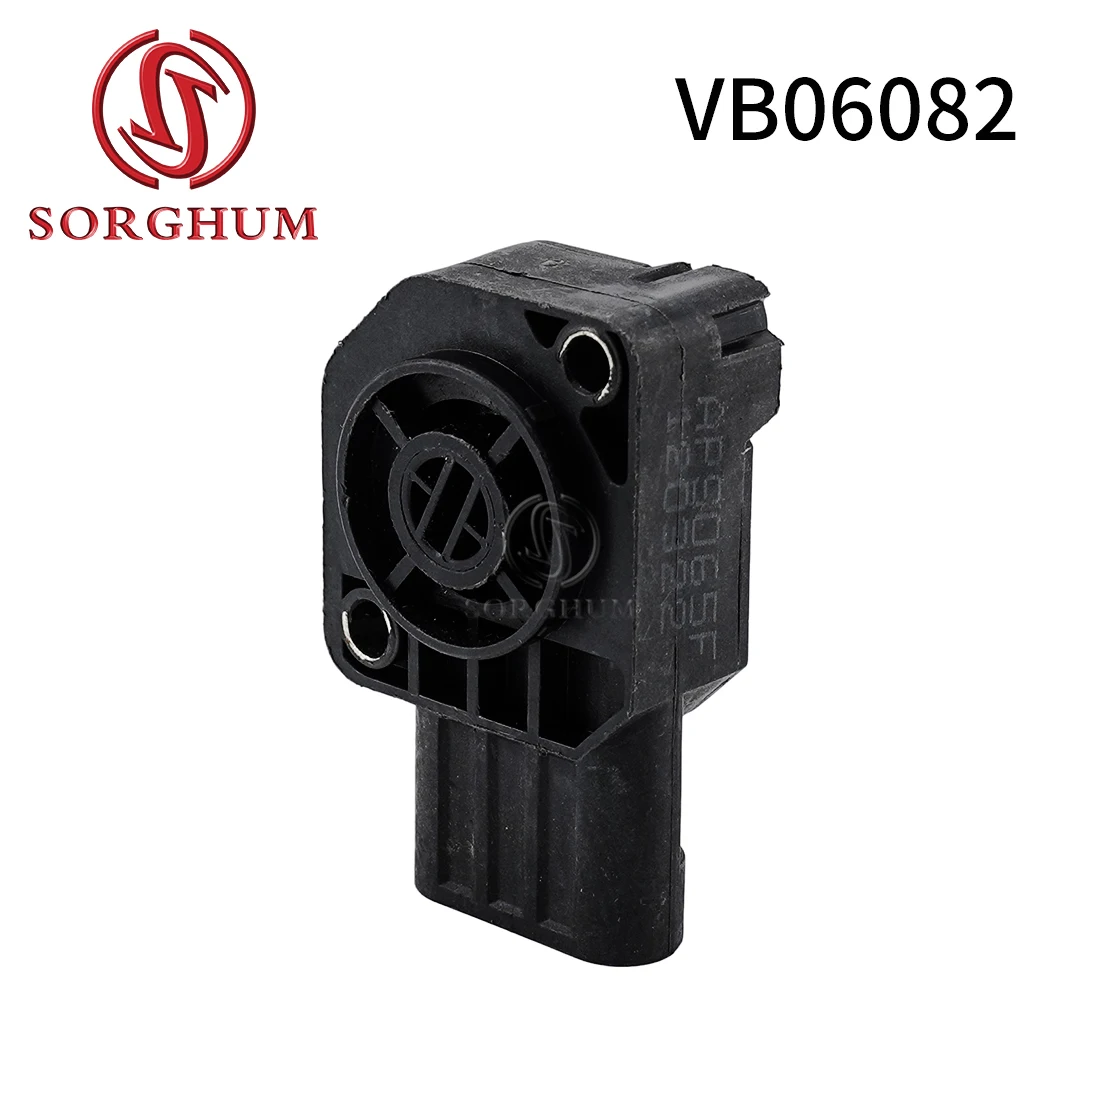 

SORGHUM VB06082 For Auto For Volvo Ford Car Automatic International TPS Throttle Position Sensor 131973E 603893C9 8C40-9F832-BA